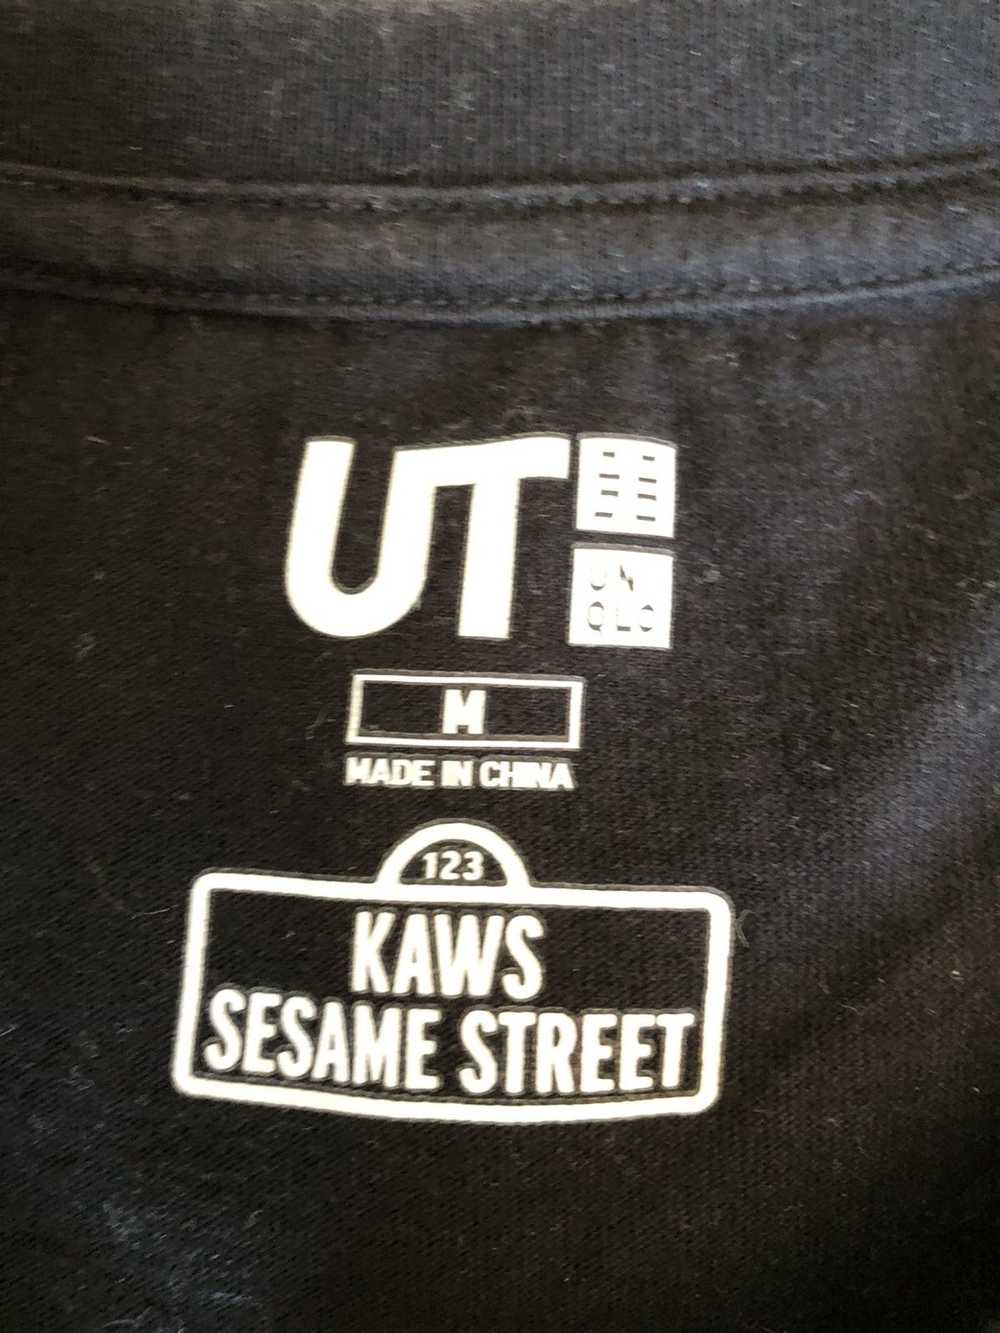 Kaws × Uniqlo Kaws x Sesame Street x Uniqlo - image 4